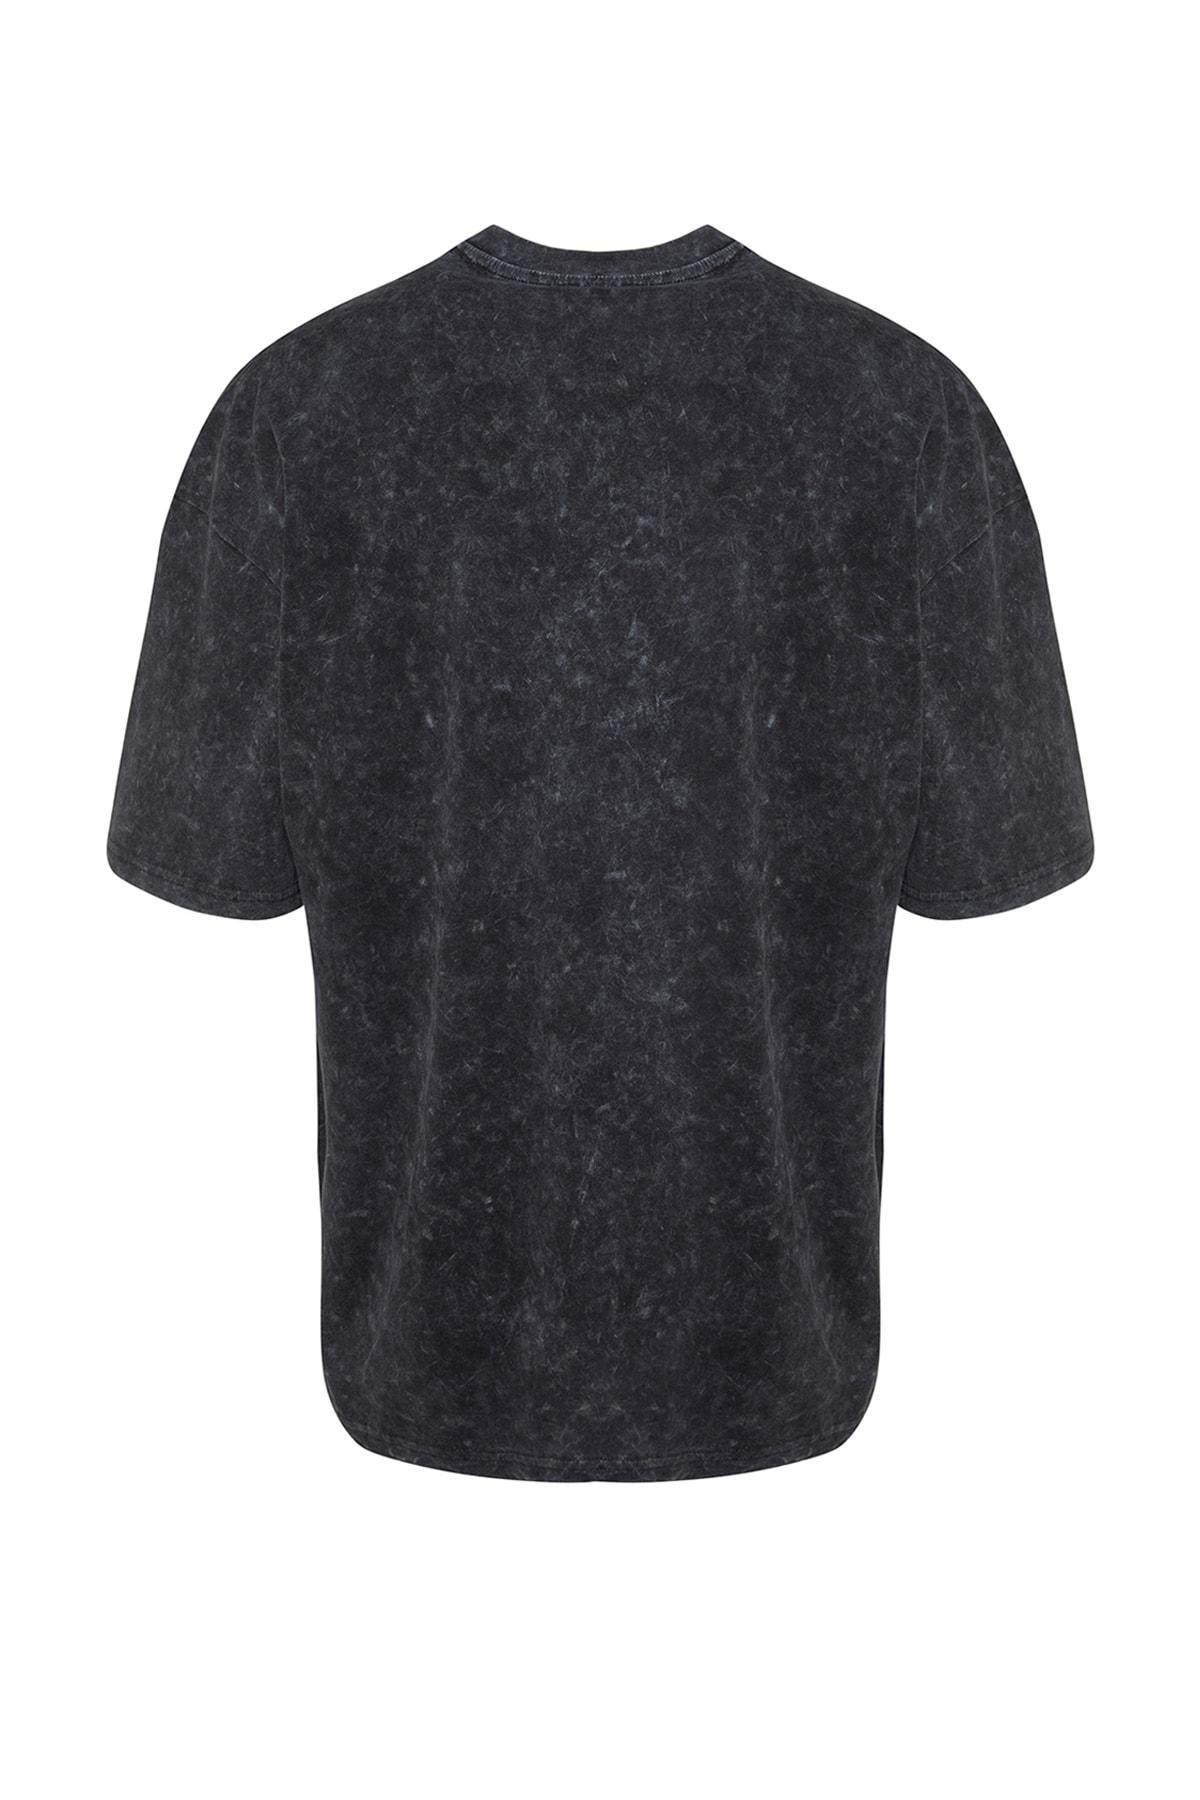 Trendyol - Black Crew Neck Oversize T-Shirt